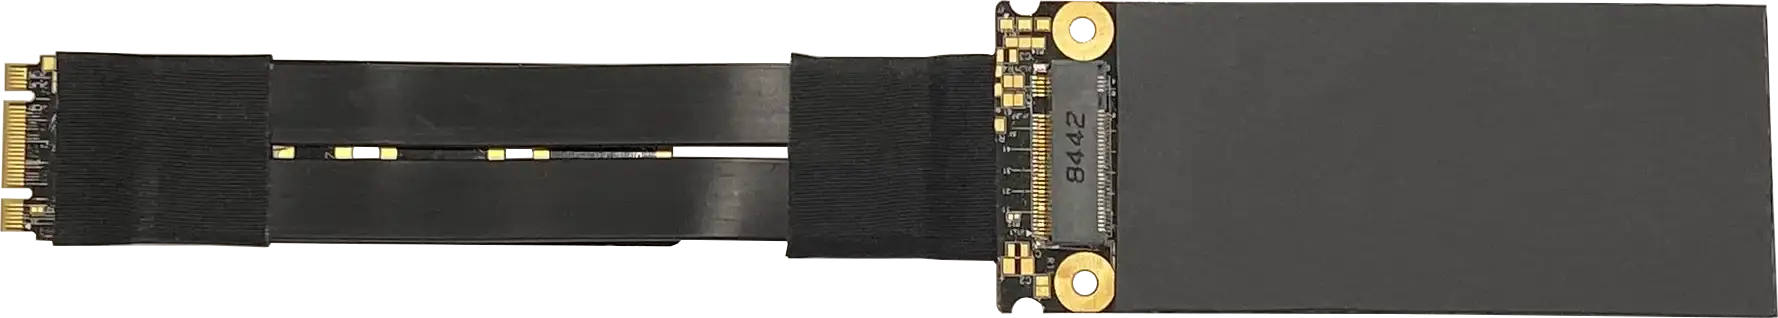 VaultDisk-to-M2-duplicator-adapter_HQ1